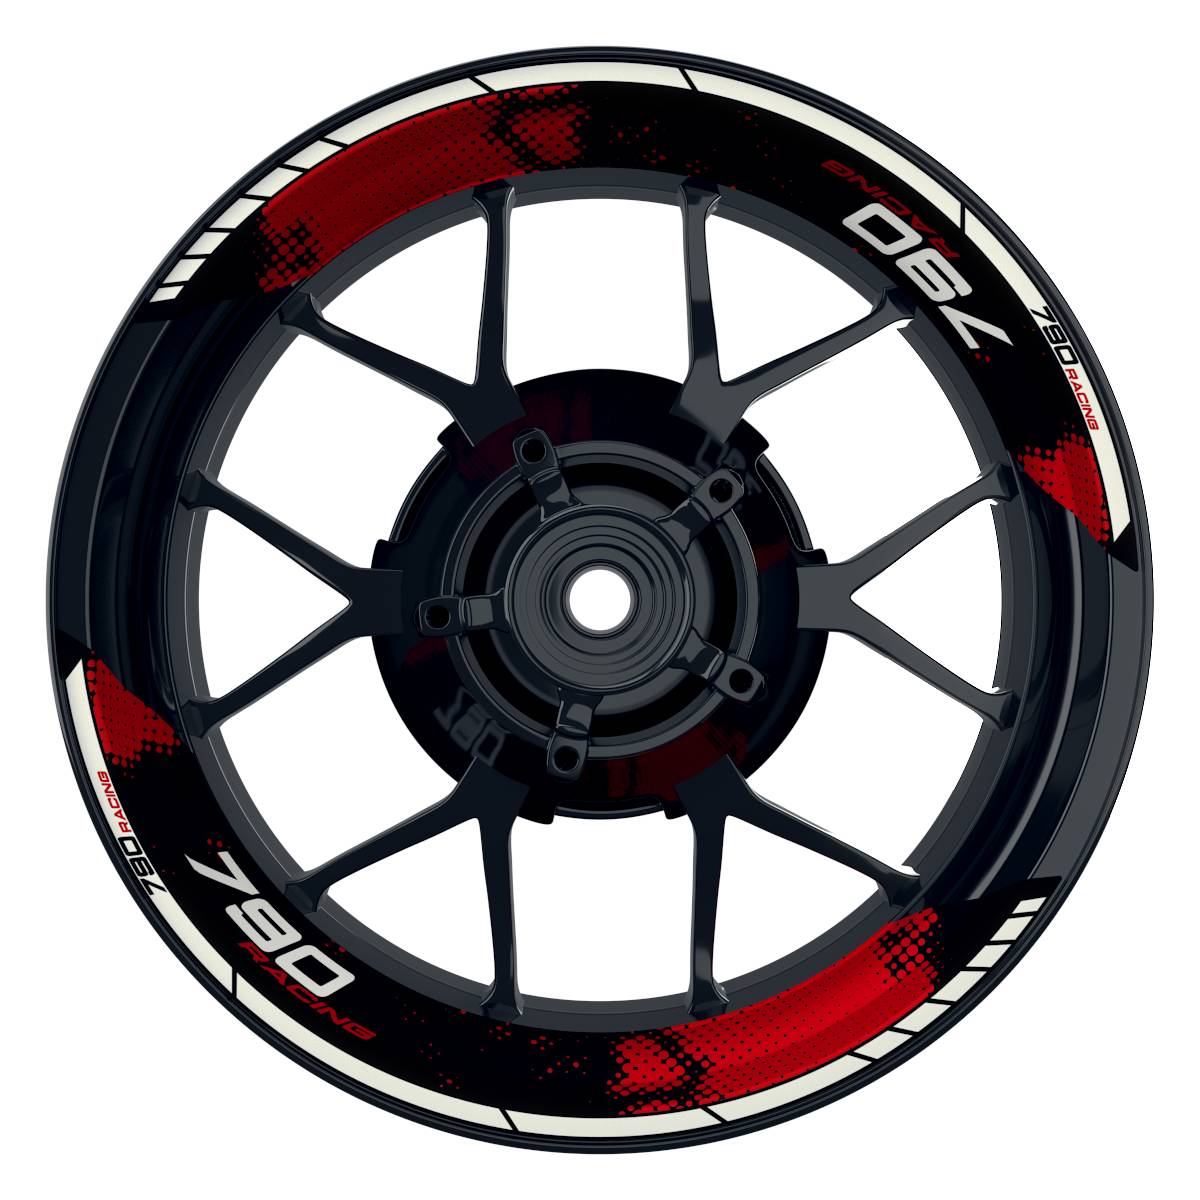 KTM Racing 790 Dots schwarz rot Frontansicht